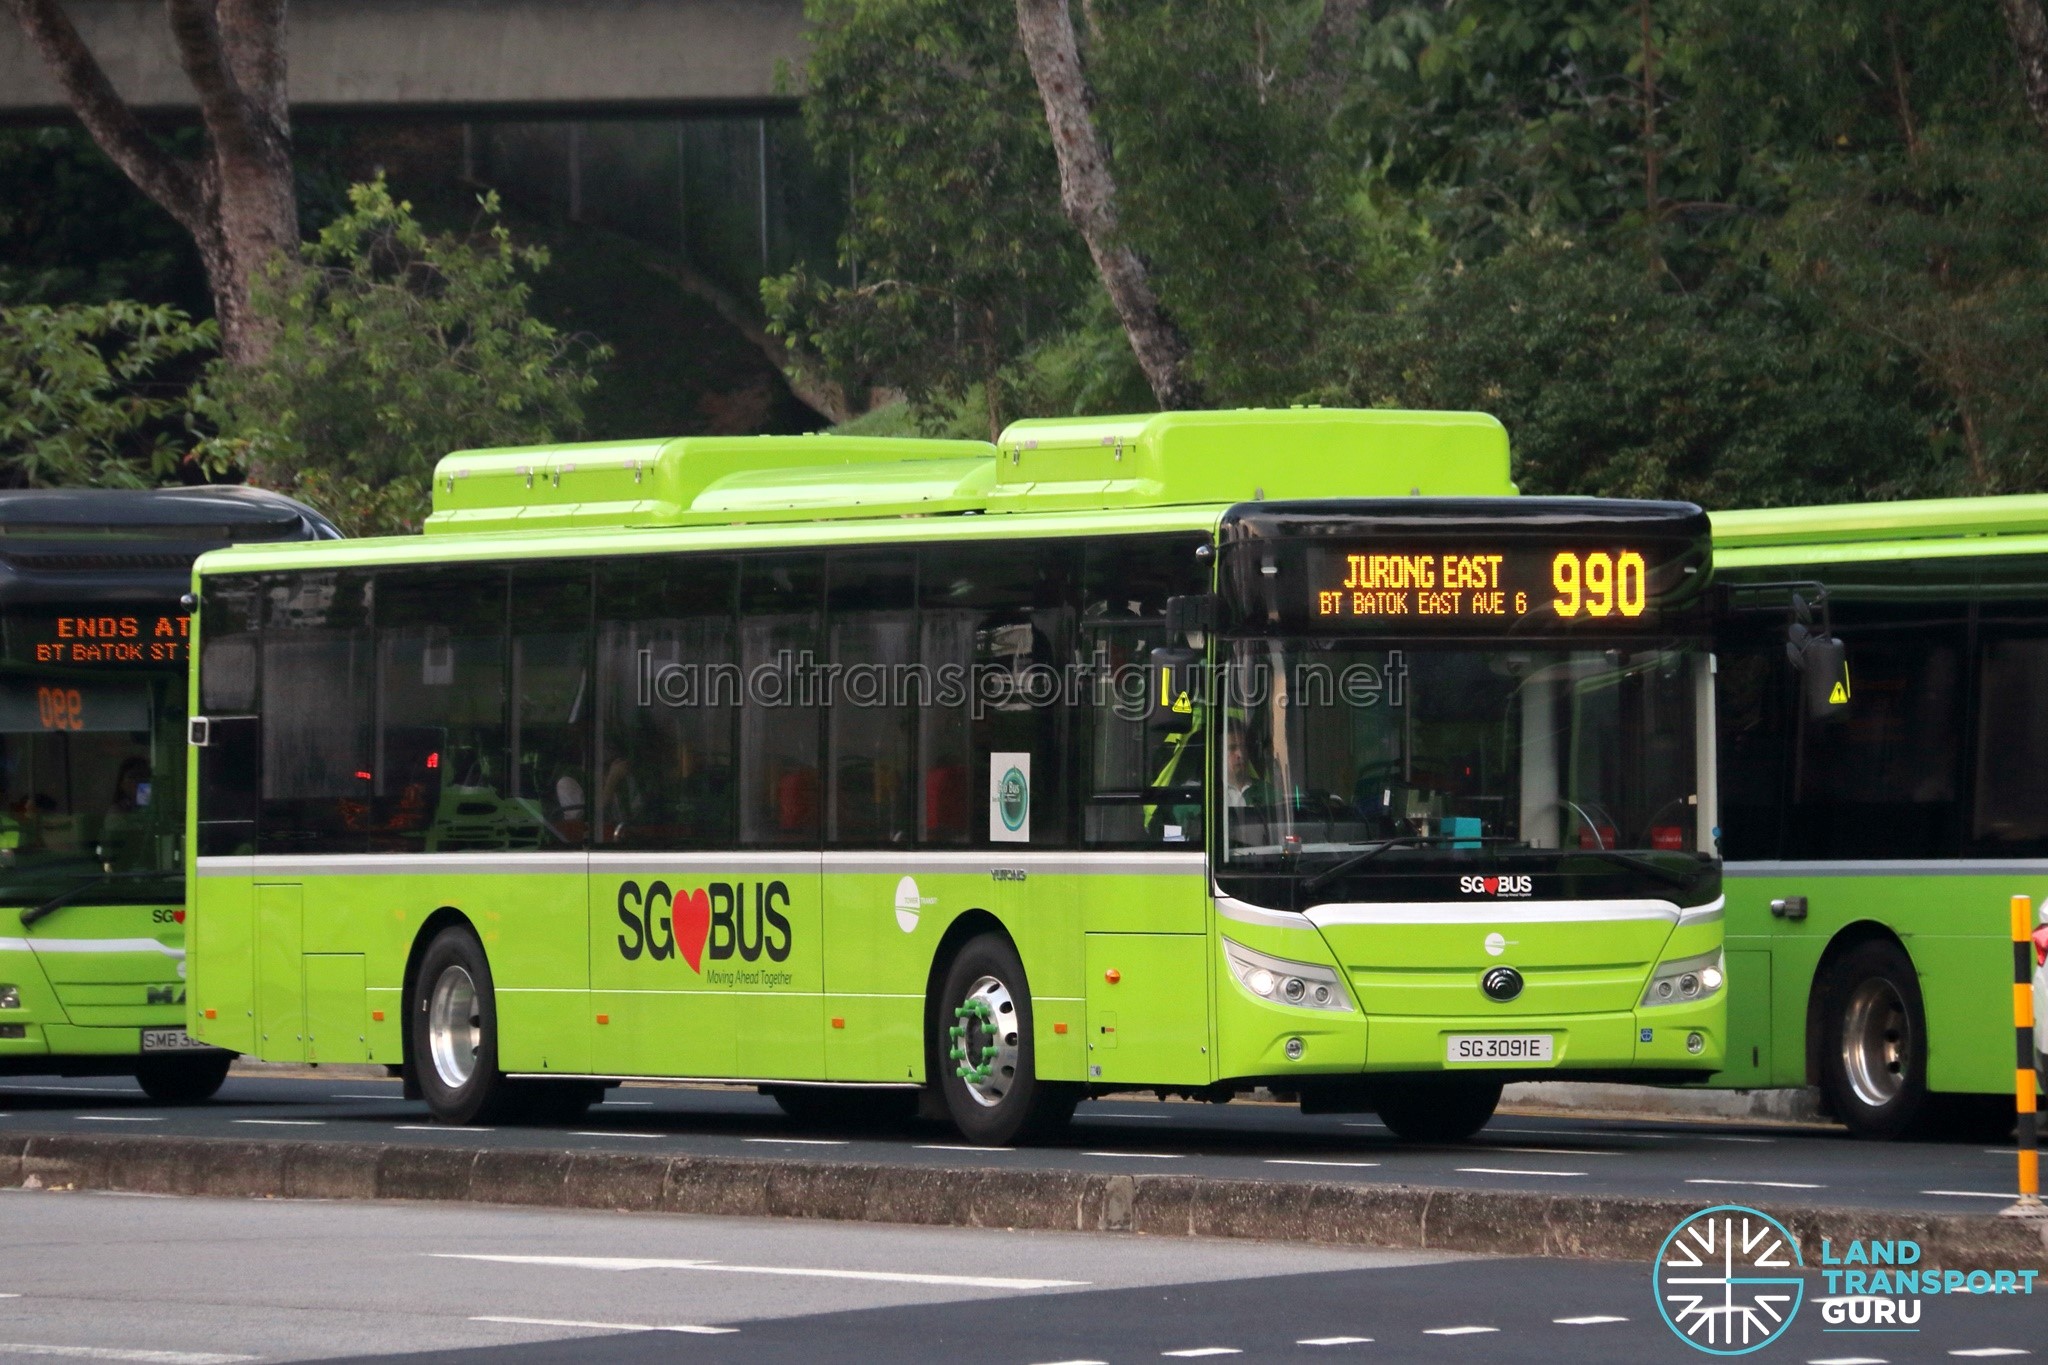 bus 990 last trip